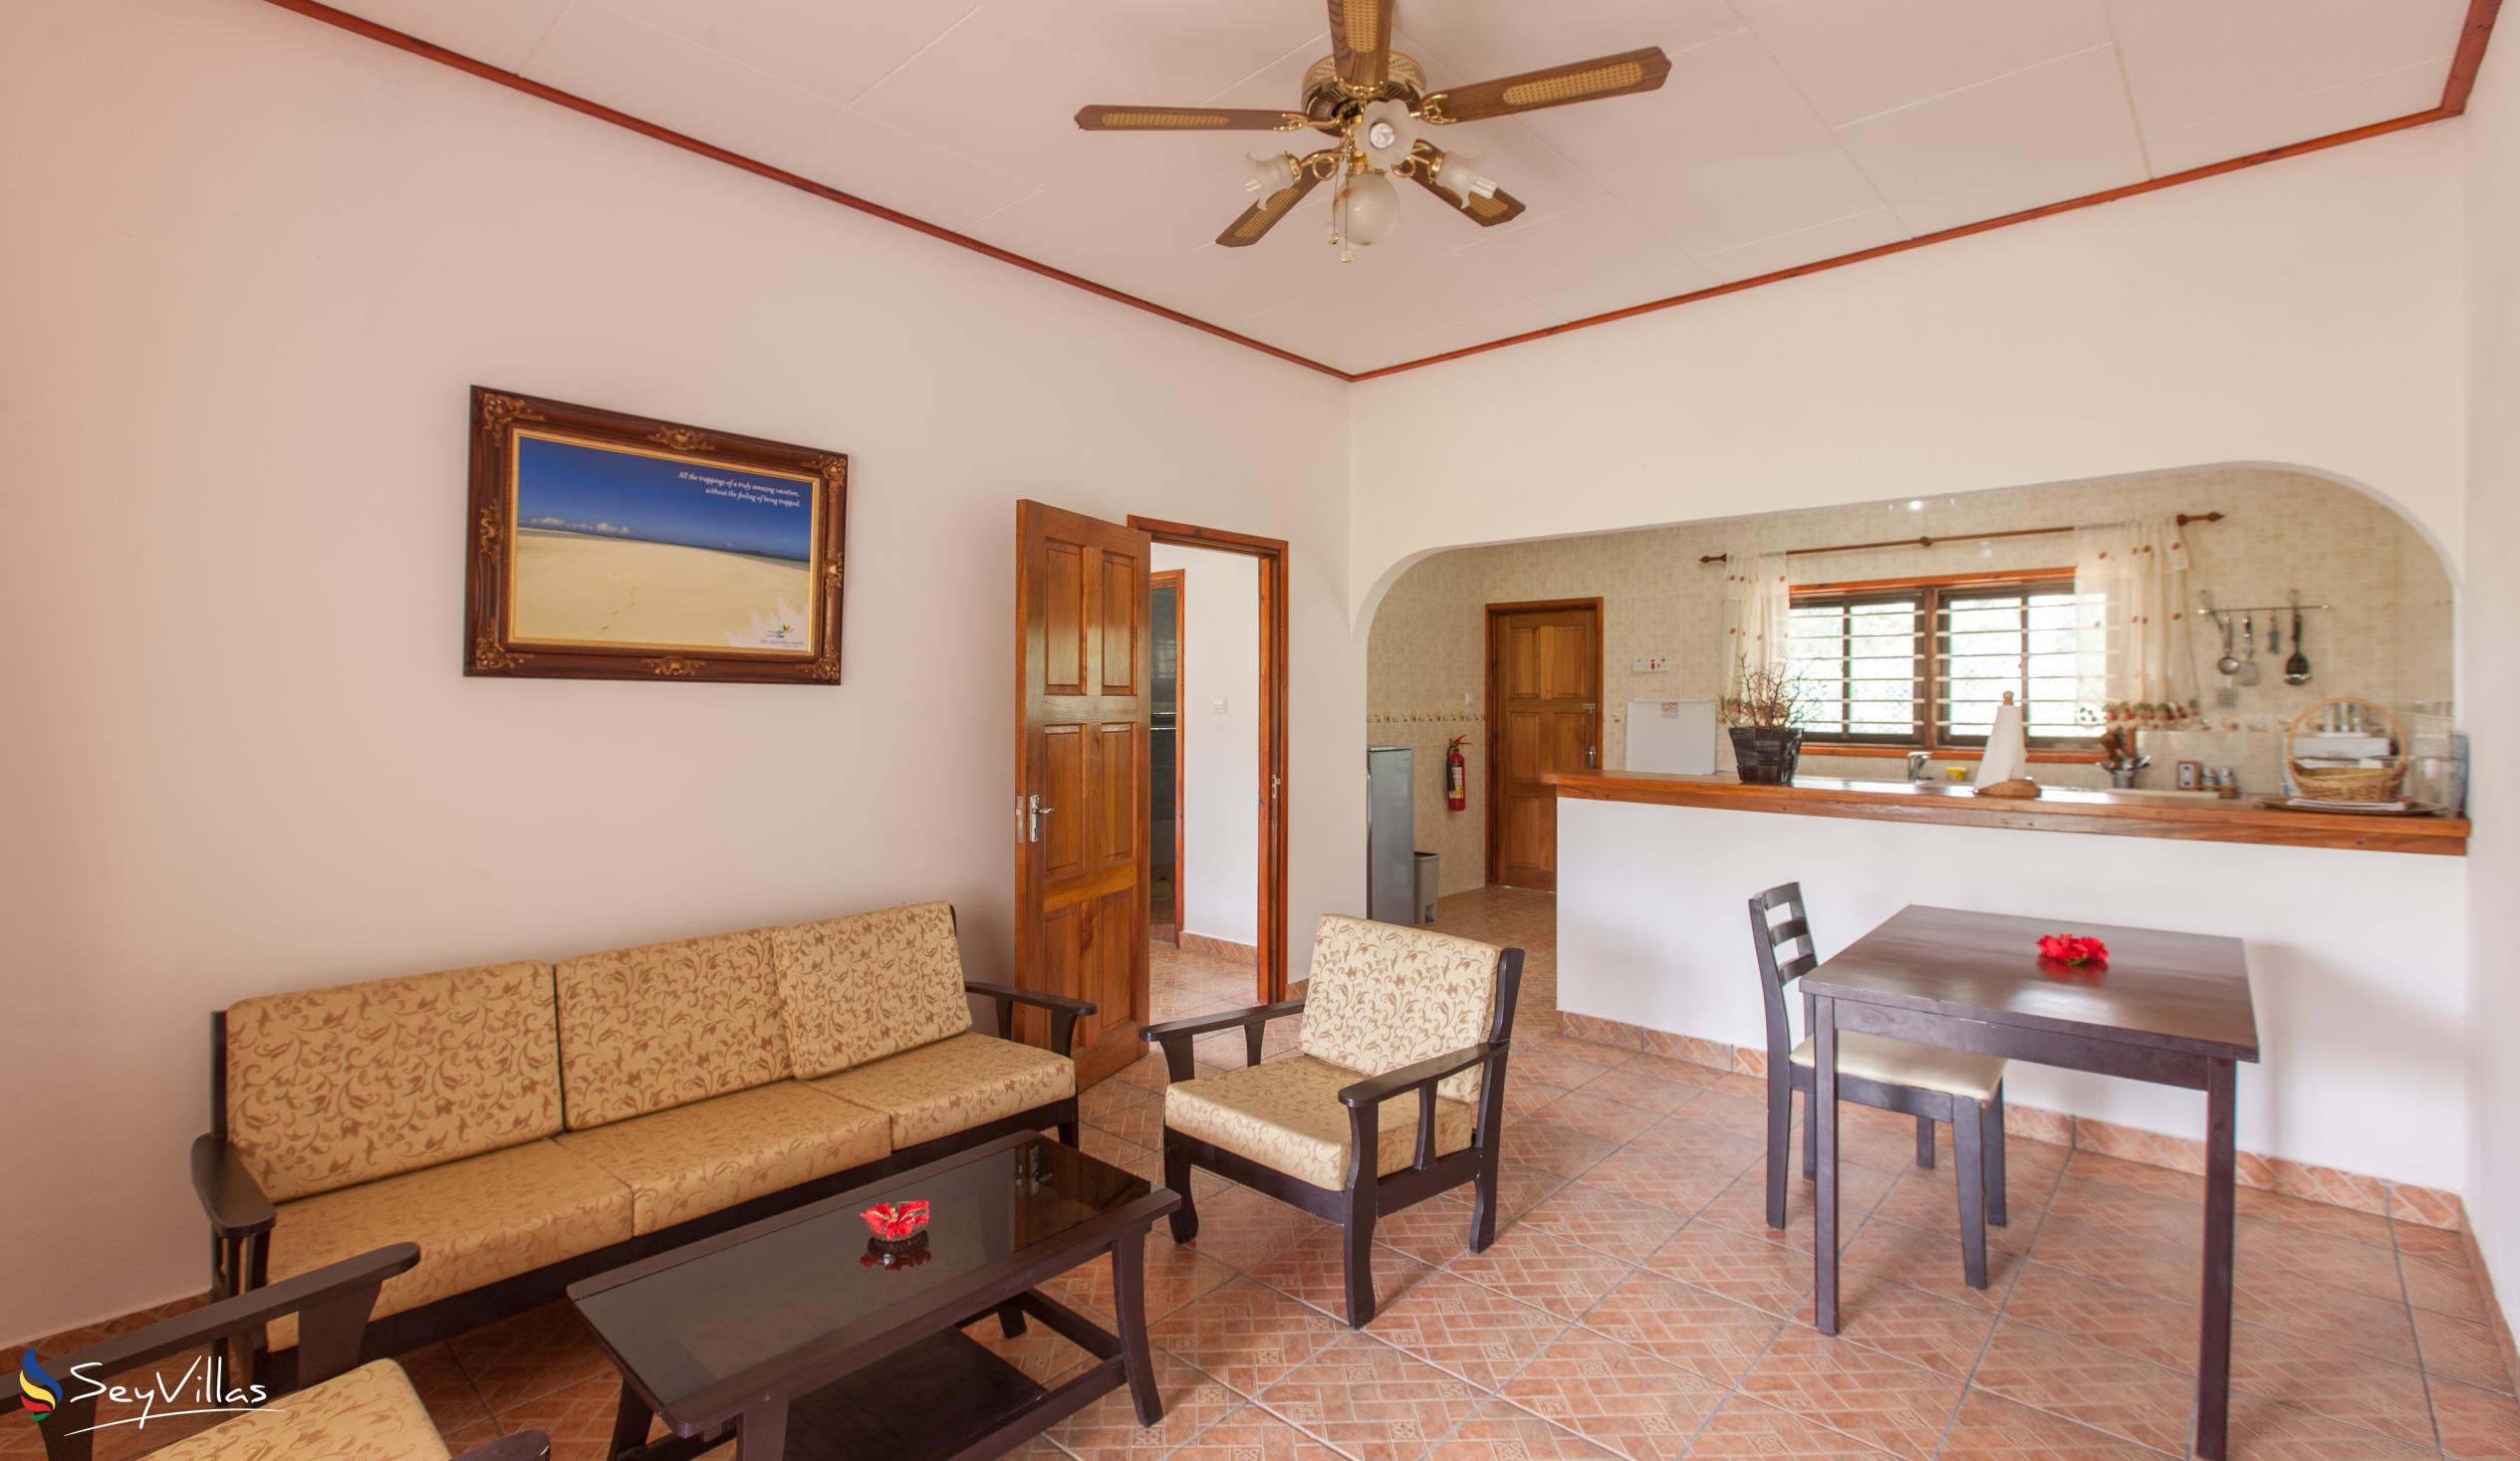 Foto 52: Zerof Self Catering  Apartments - Appartement à 3 chambres - La Digue (Seychelles)